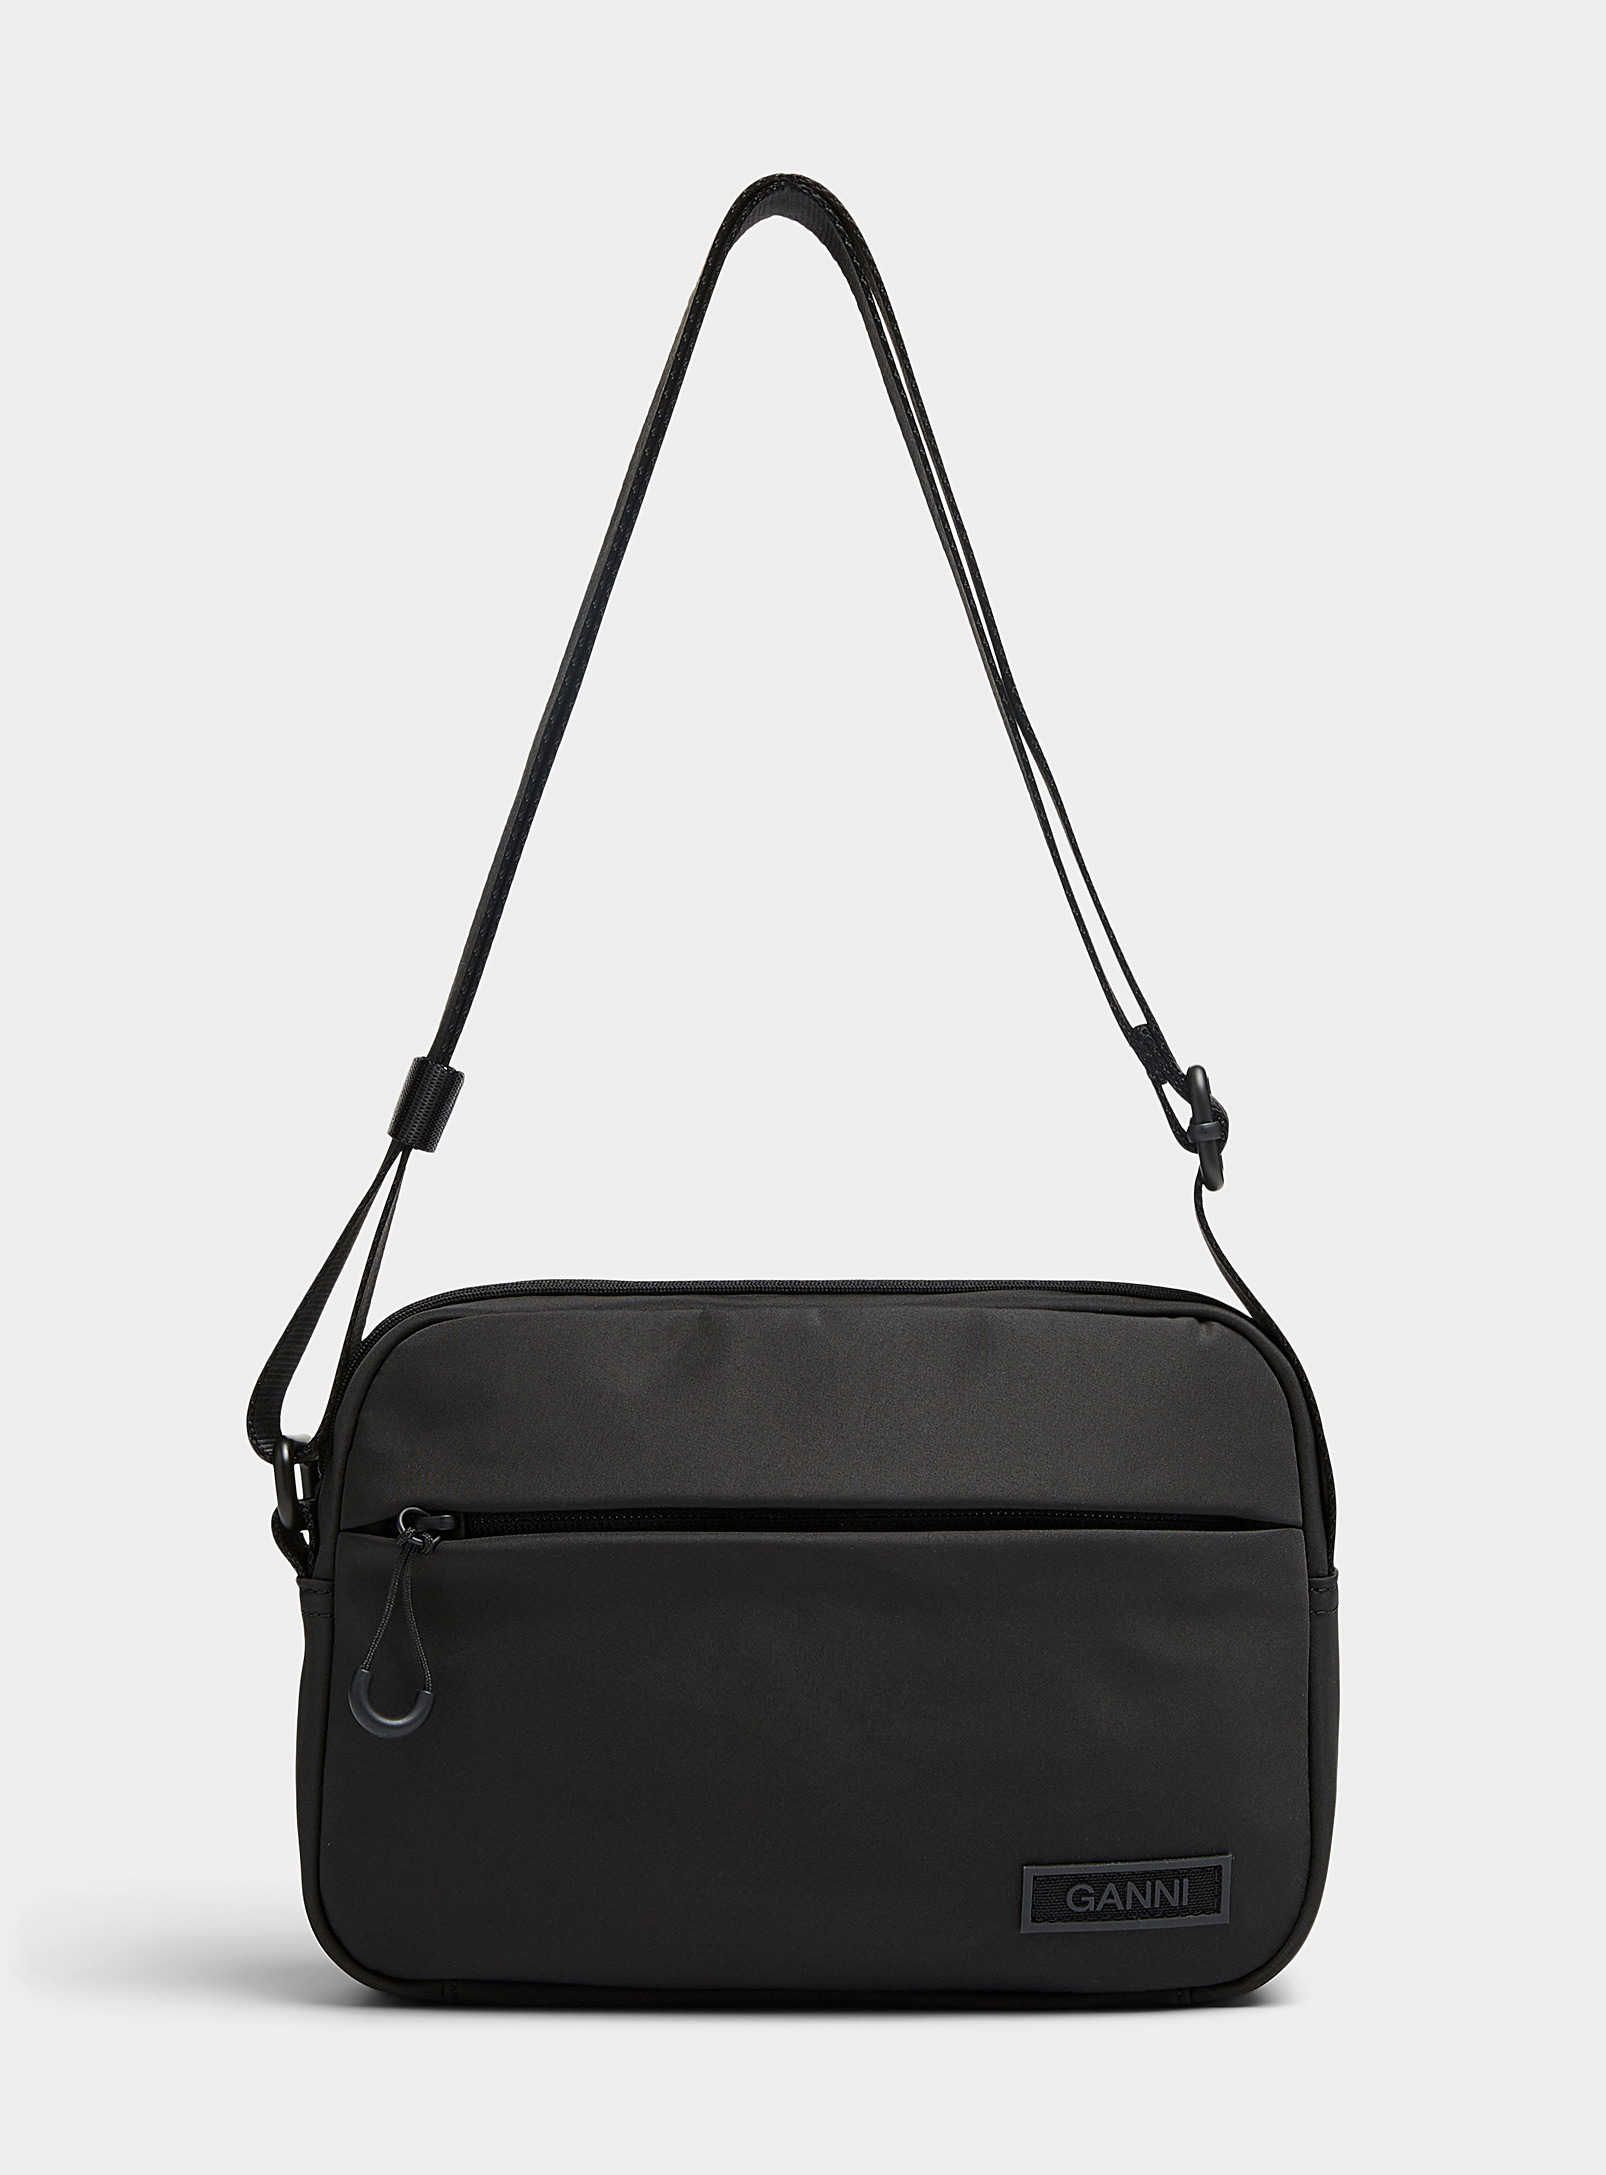 Ganni - Women's Black recycled rectangular bag